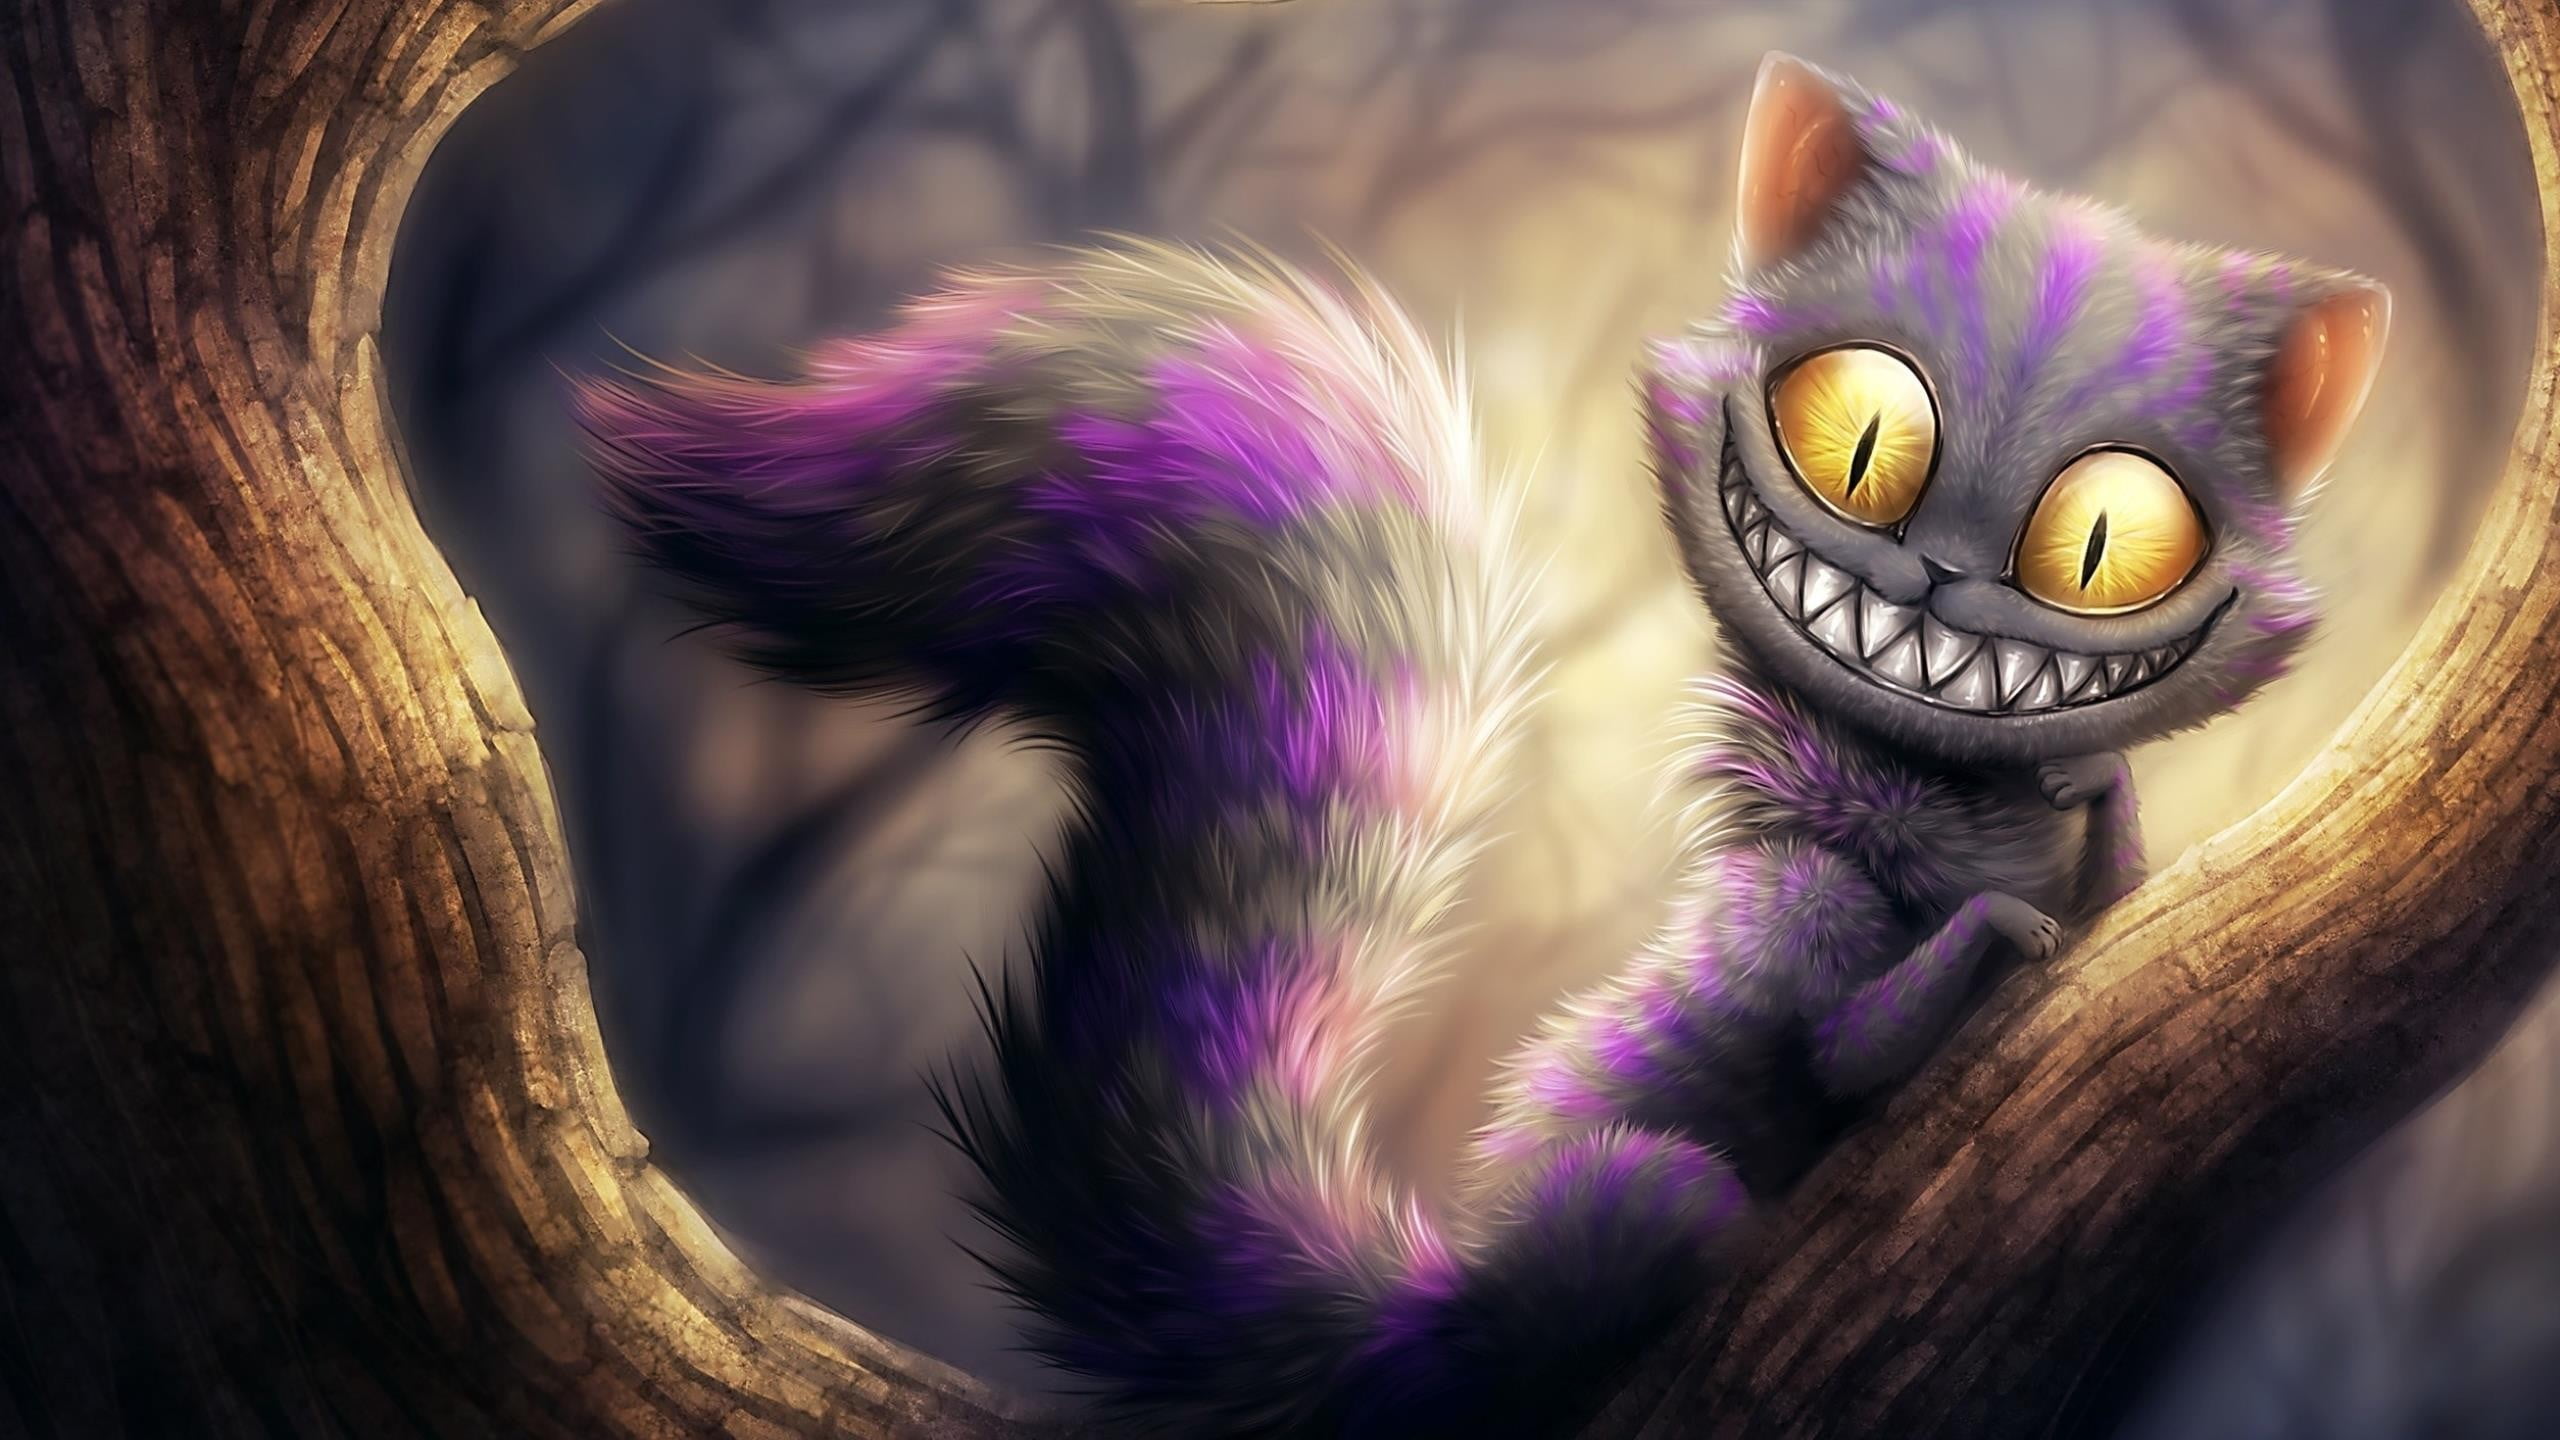 2736x1824 resolution | grey and purple Cheshire cat illustration, Alice ...